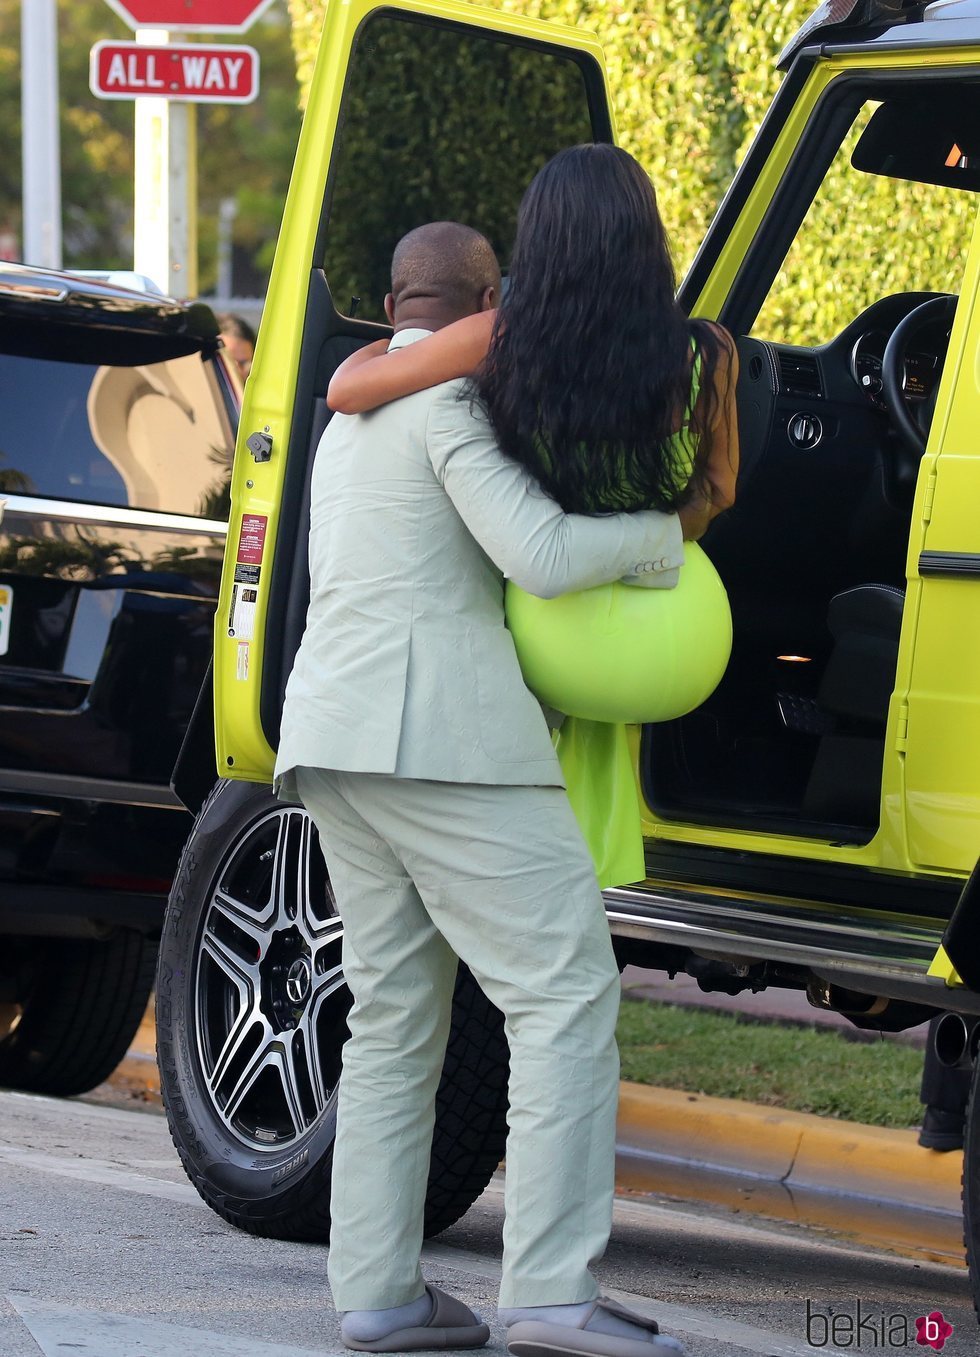 Kanye West ayudando a bajar a Kim Kardashian del coche en Miami